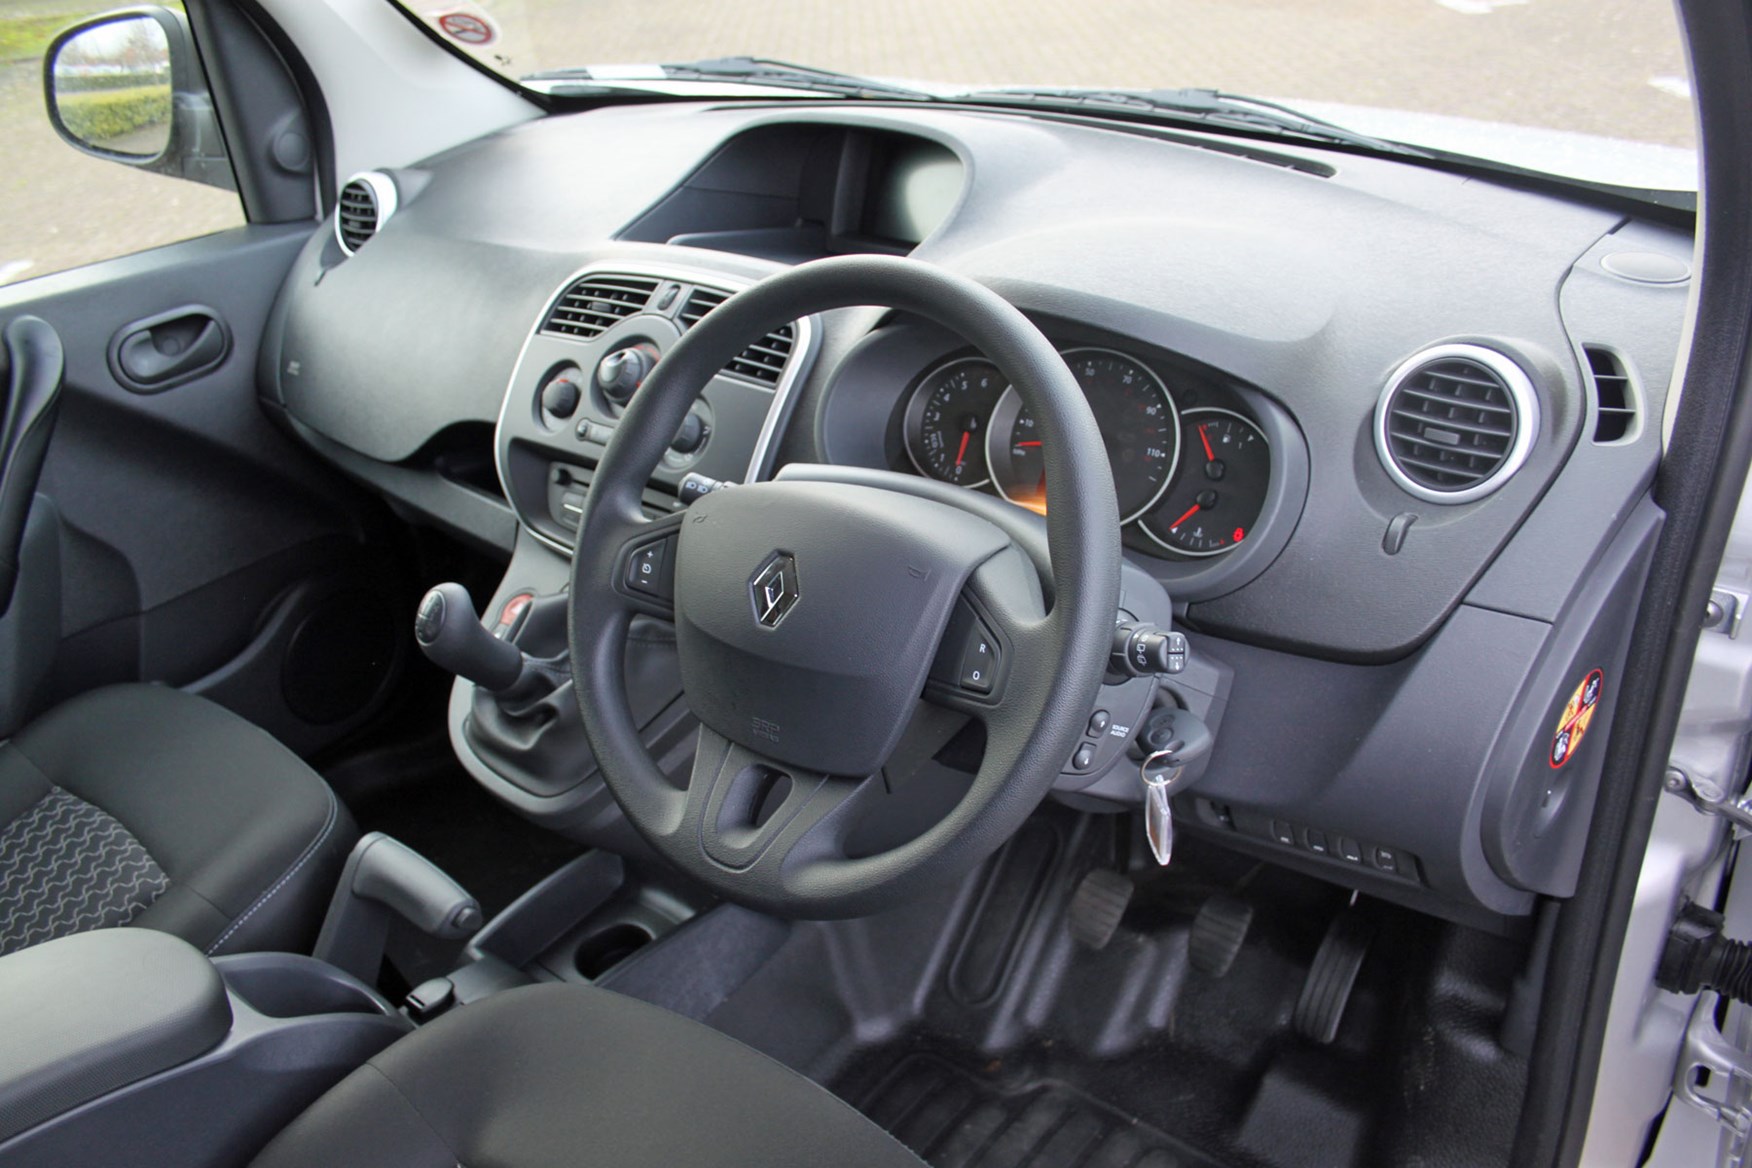 Renault Kangoo Sport review - cab interior